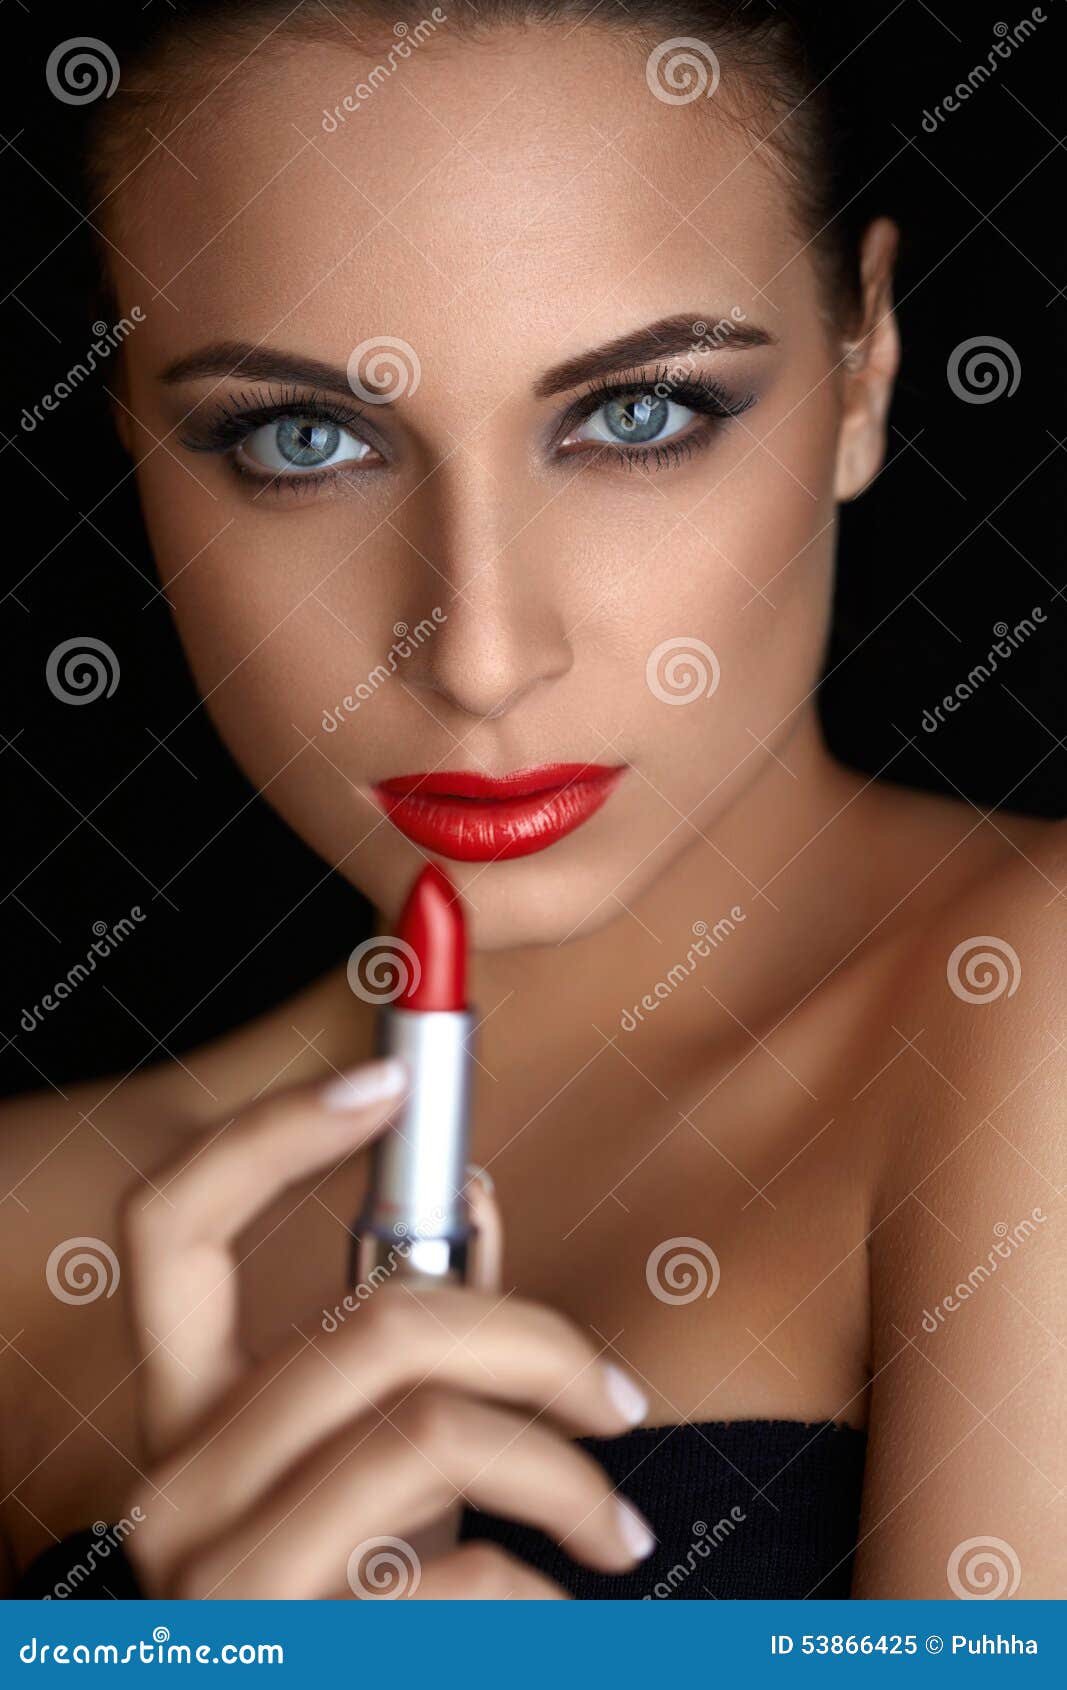 red lips. beutifull woman doing makeup applying lipstick